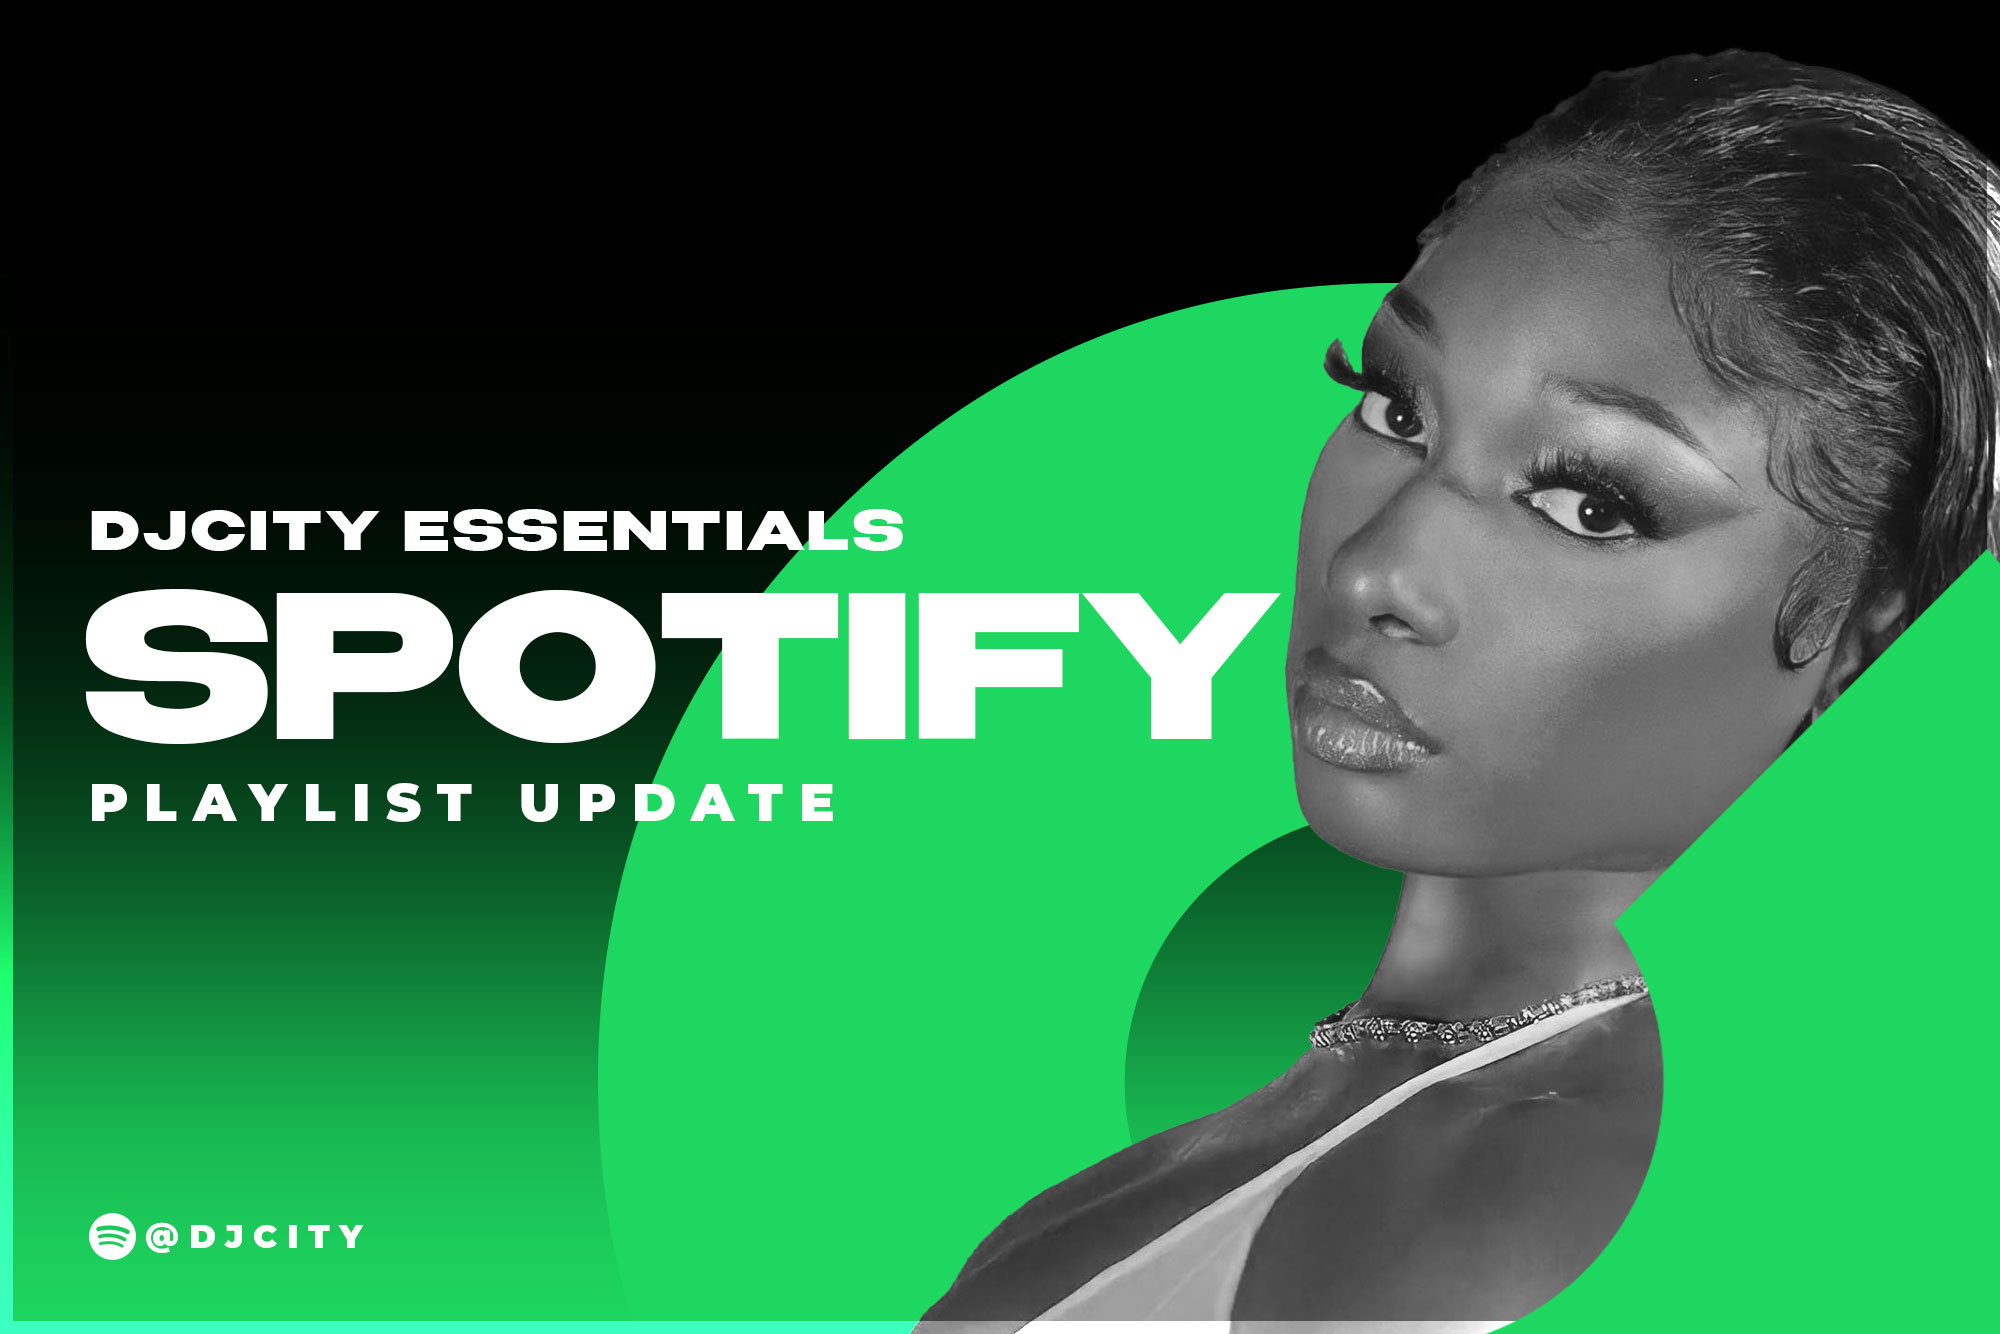 DJcity’s Spotify Playlist Update: Nov. 2